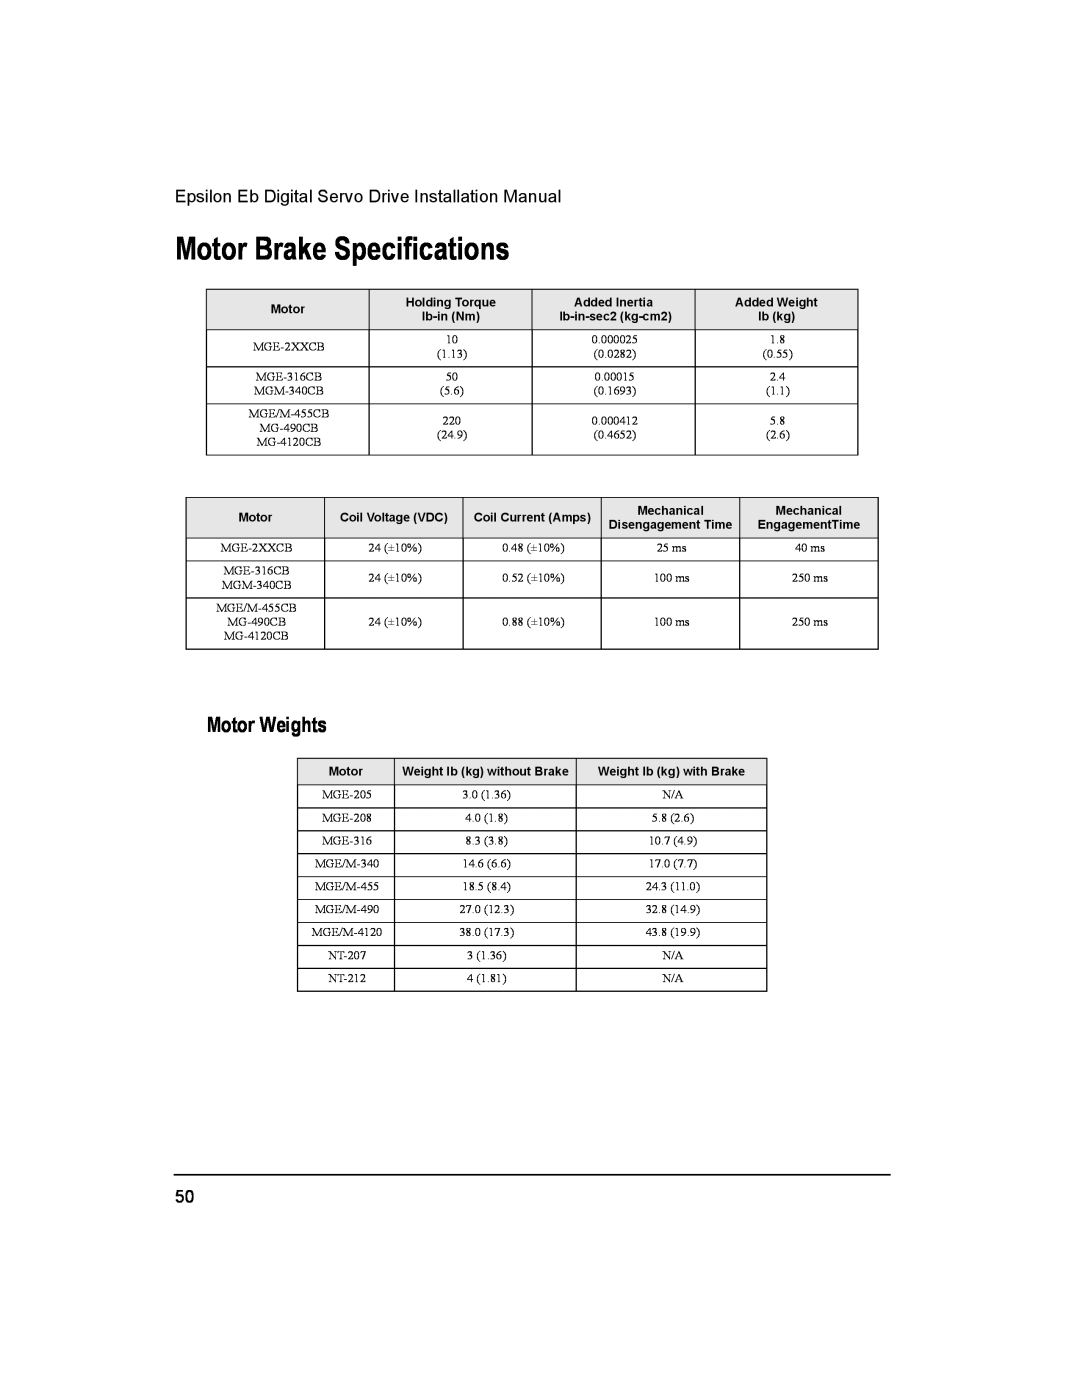 Emerson 400501-05 Motor Brake Specifications, Motor Weights, Epsilon Eb Digital Servo Drive Installation Manual 